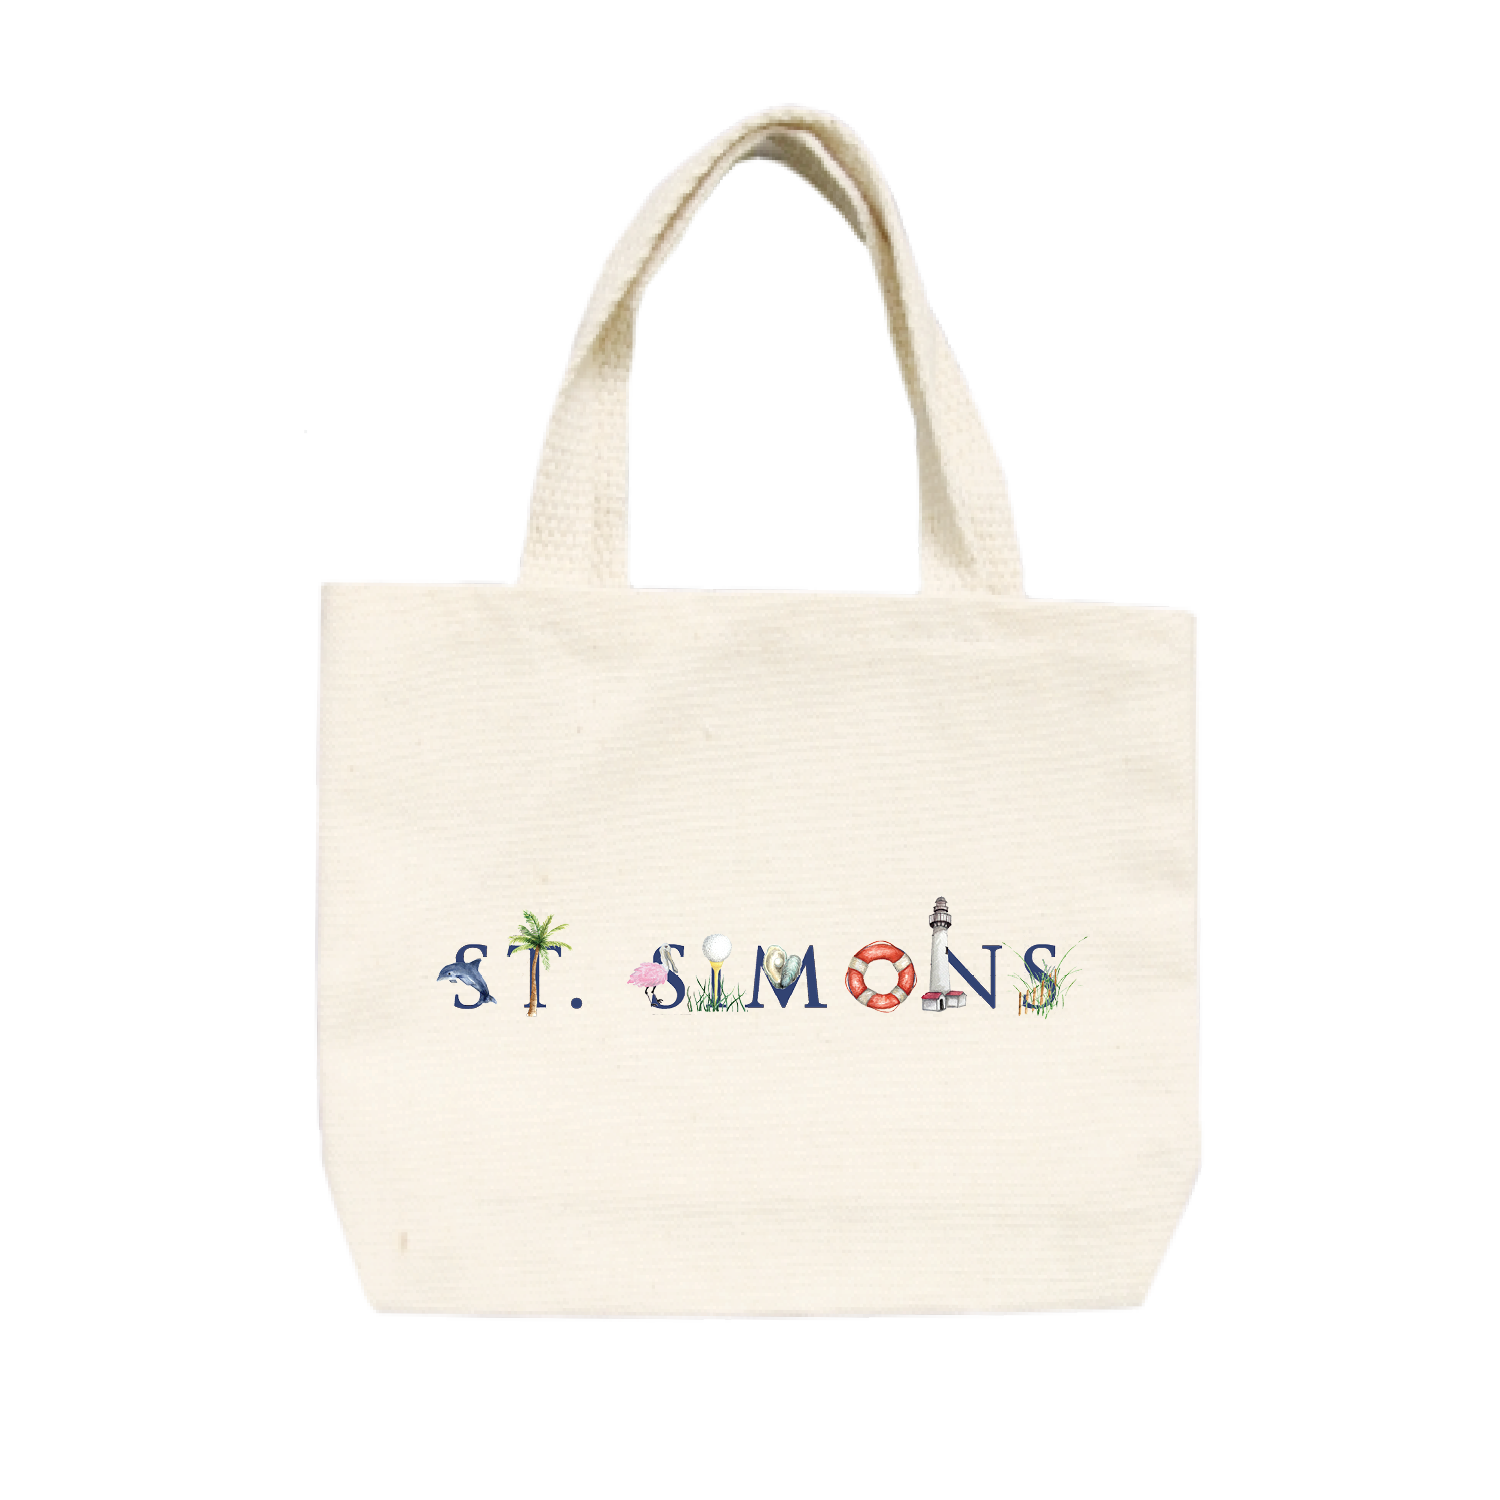 St. Simons small tote